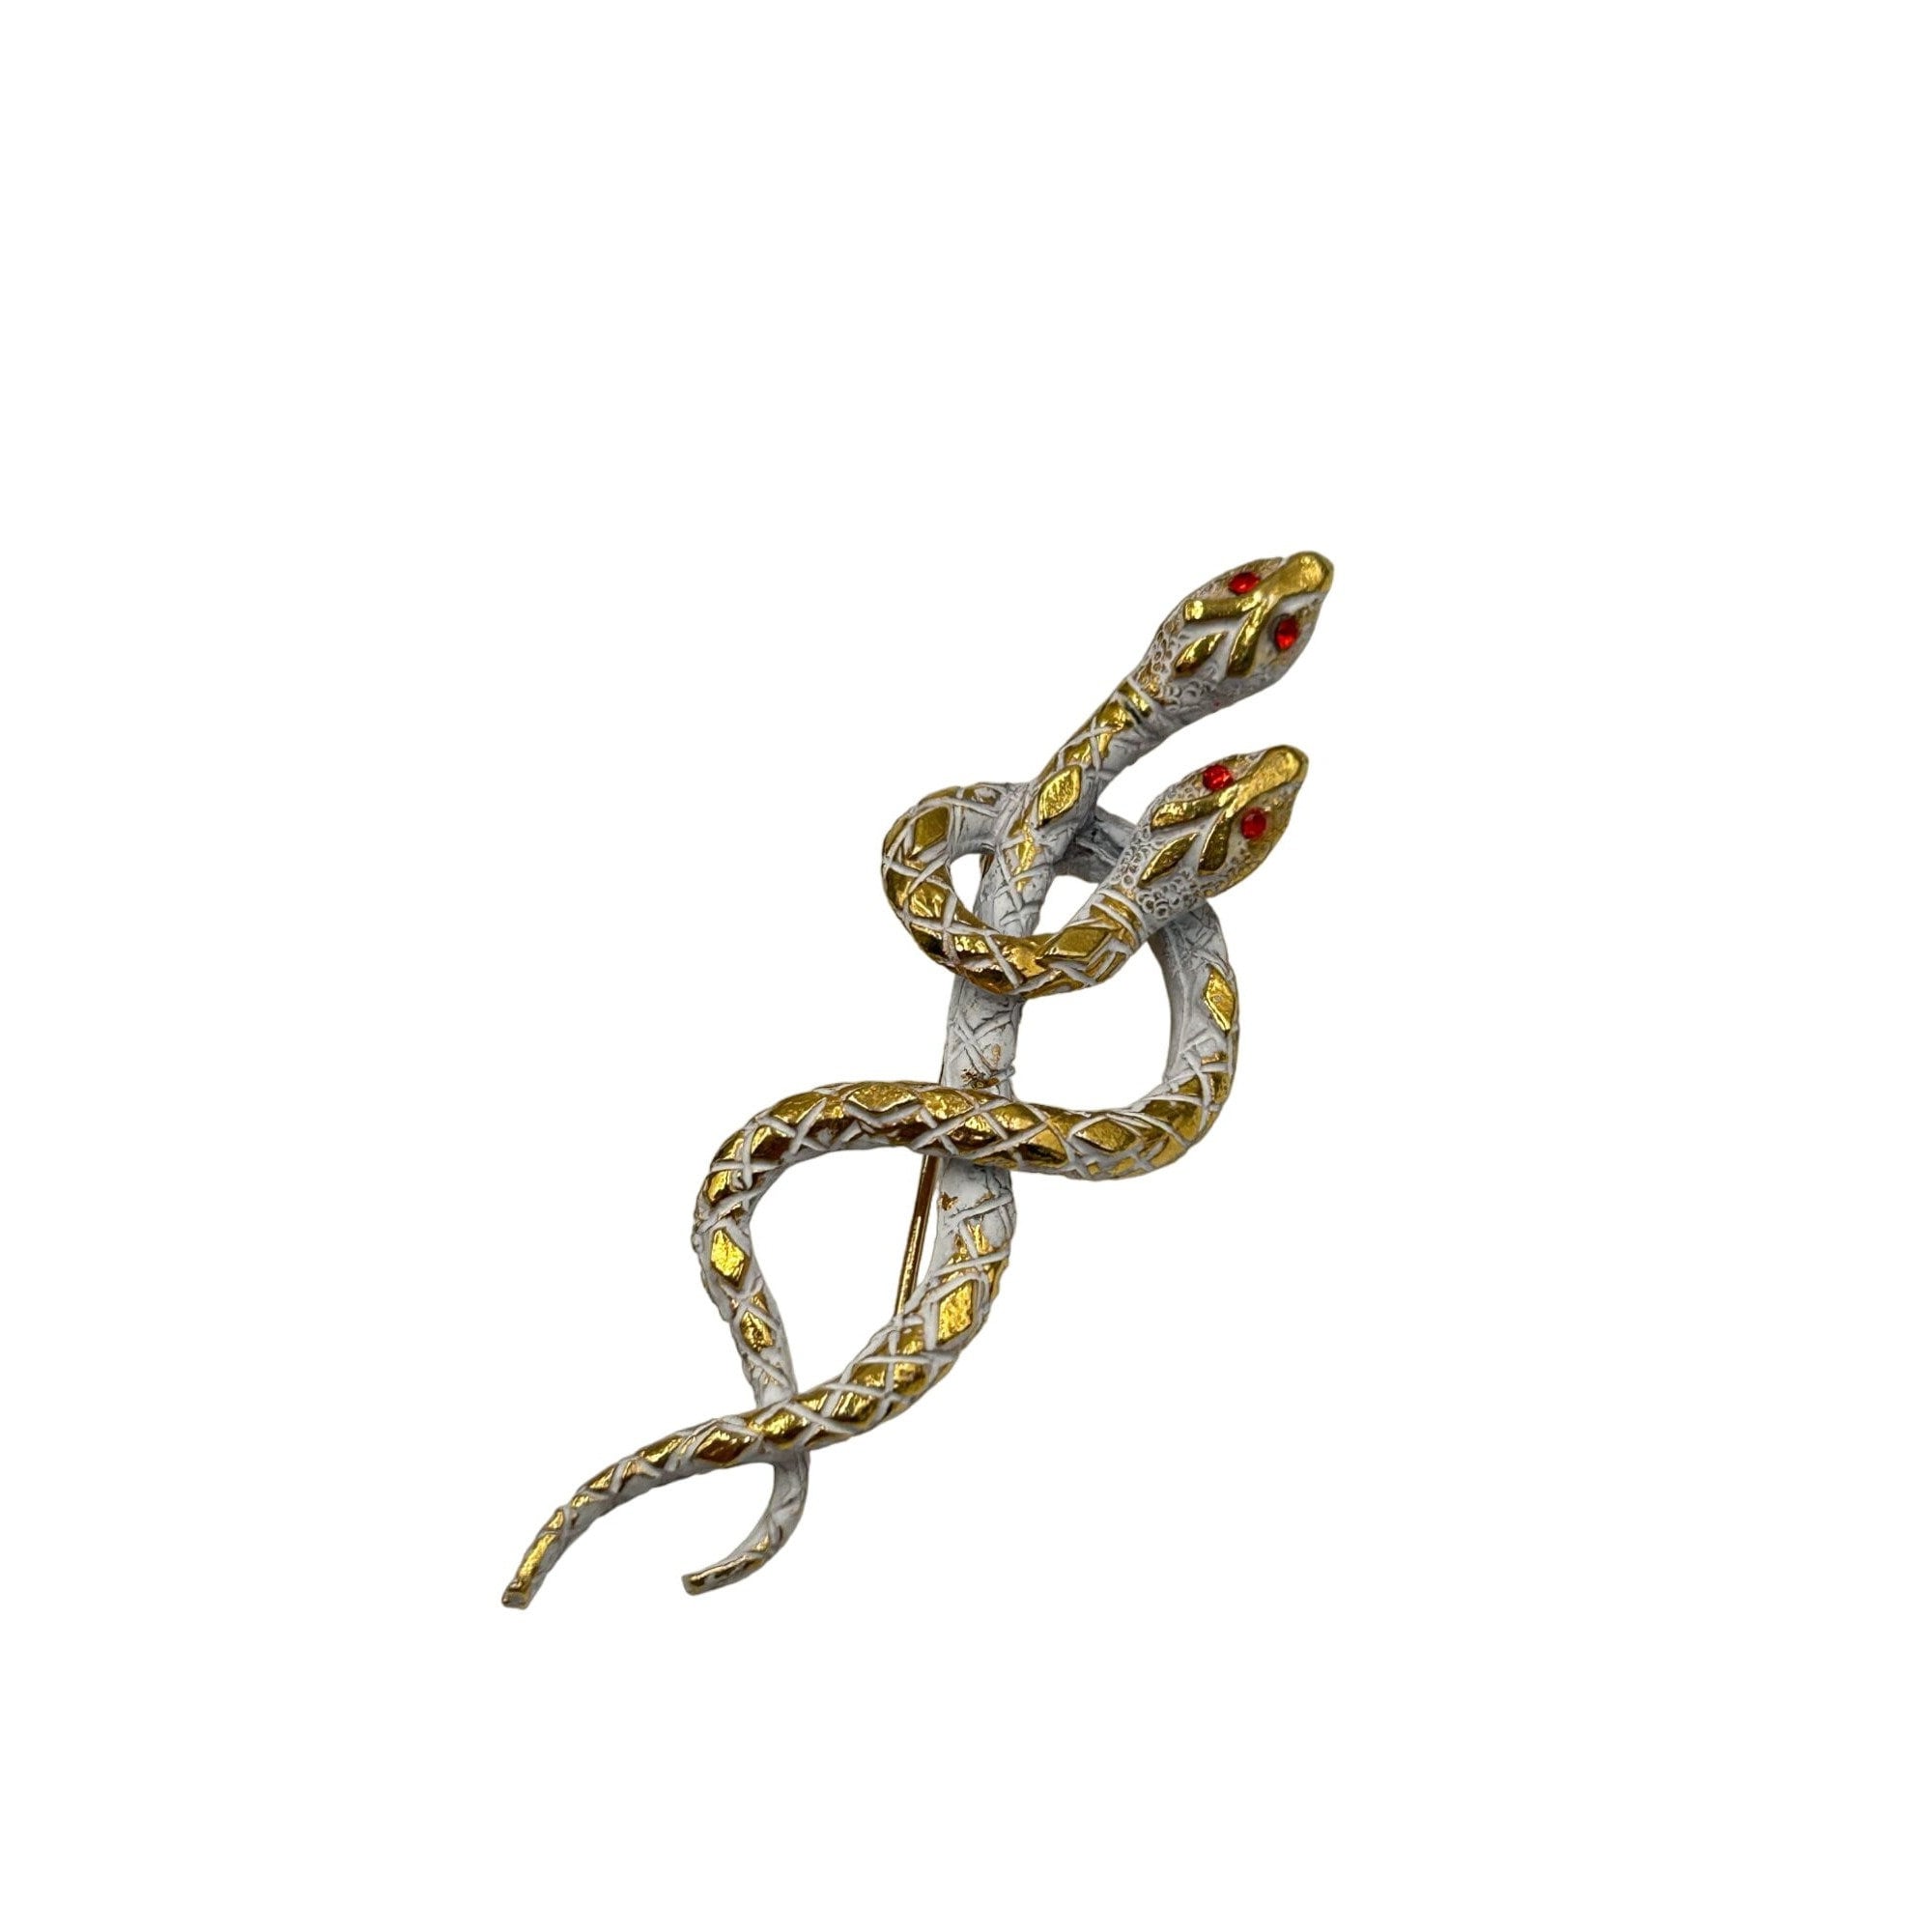 Vintage Arthur Pepper ART Coiled Snake Brooch Scarf Clip - Ruby Lane